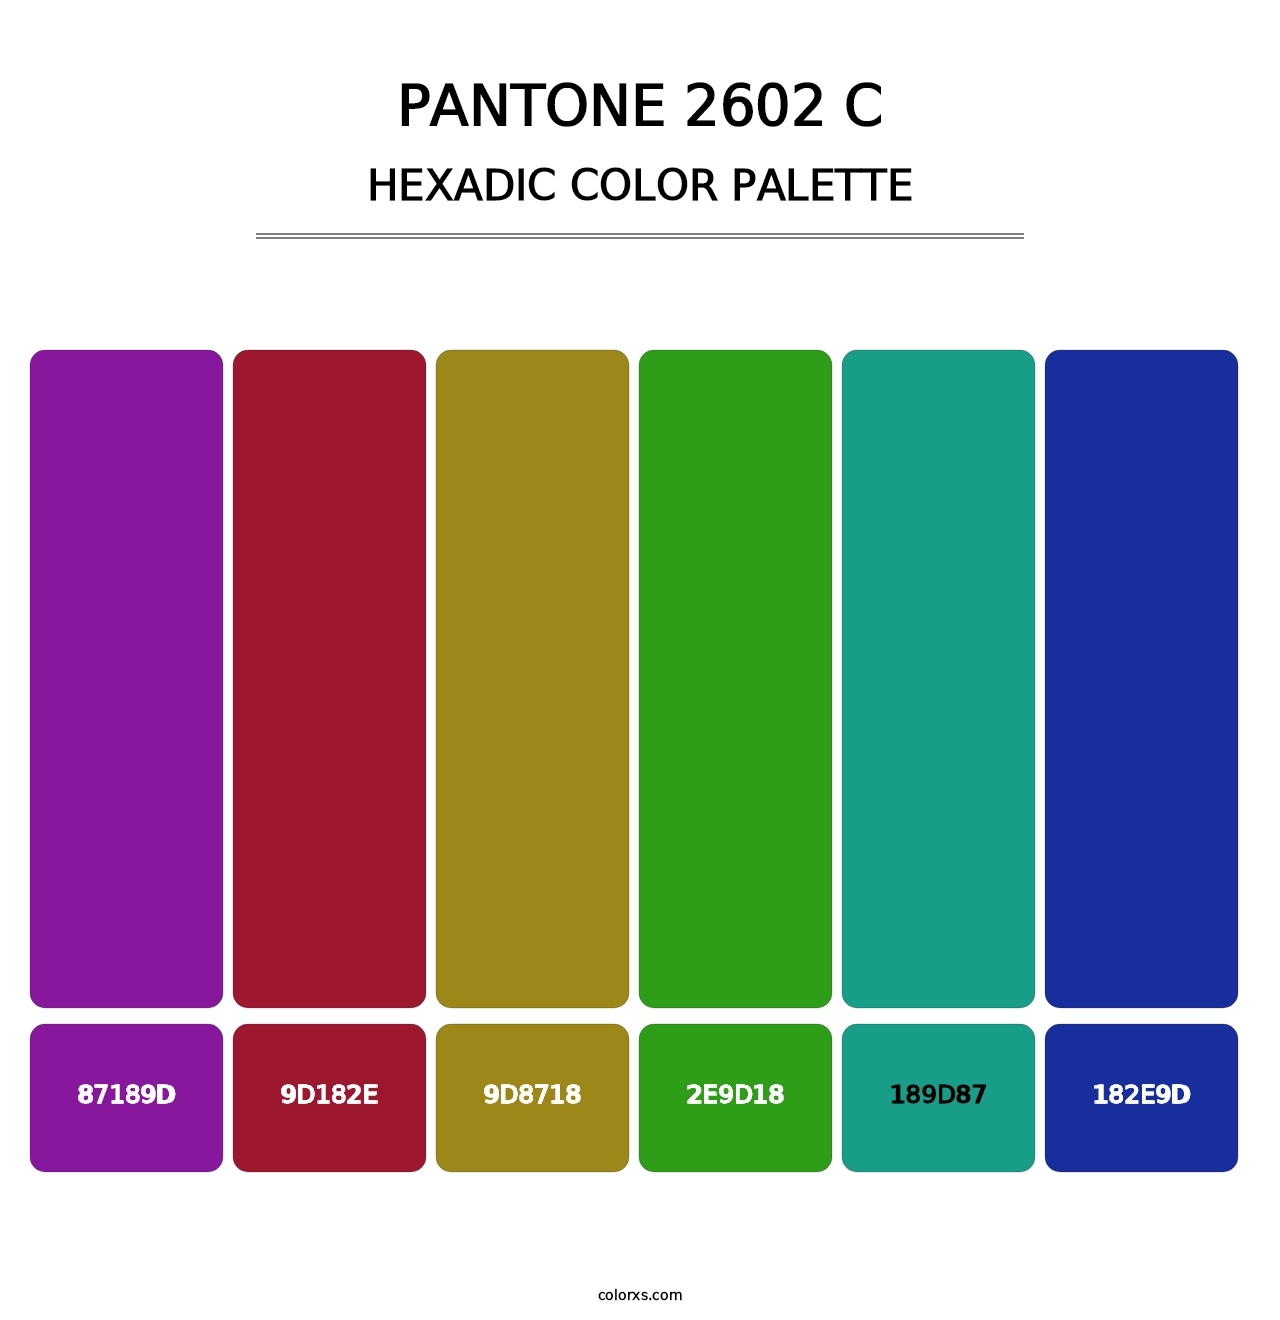 PANTONE 2602 C - Hexadic Color Palette